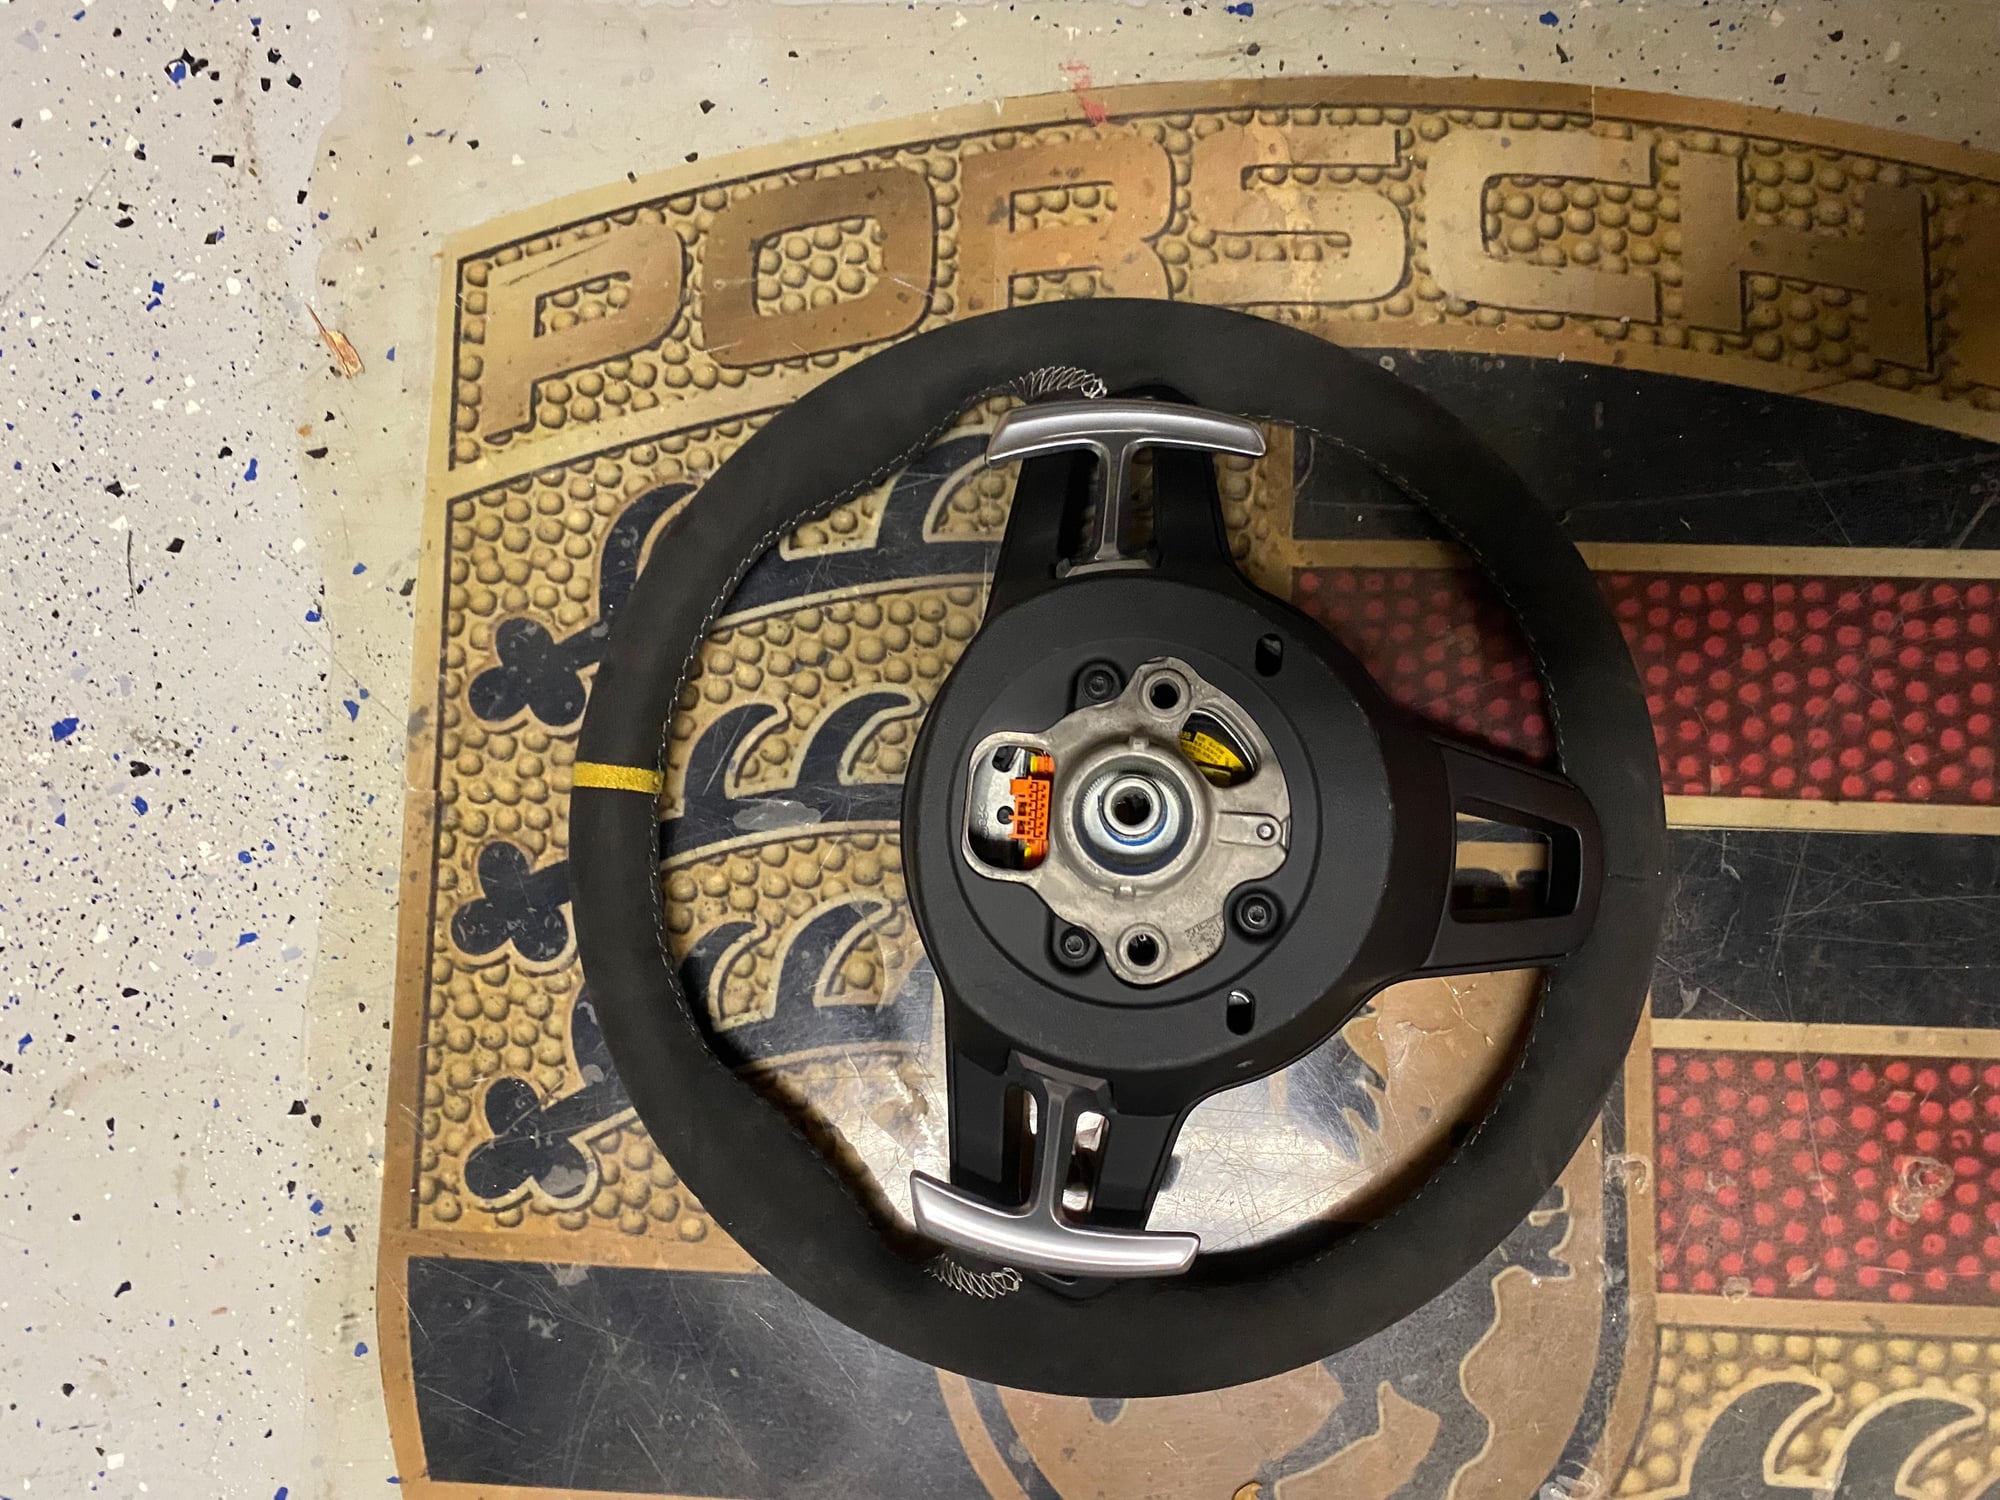 Steering/Suspension - 2021 Porsche Cayman GT4 718 Alcantara Steering Wheel and airbag - Used - 2014 to 2022 Porsche All Models - Davie, FL 33325, United States